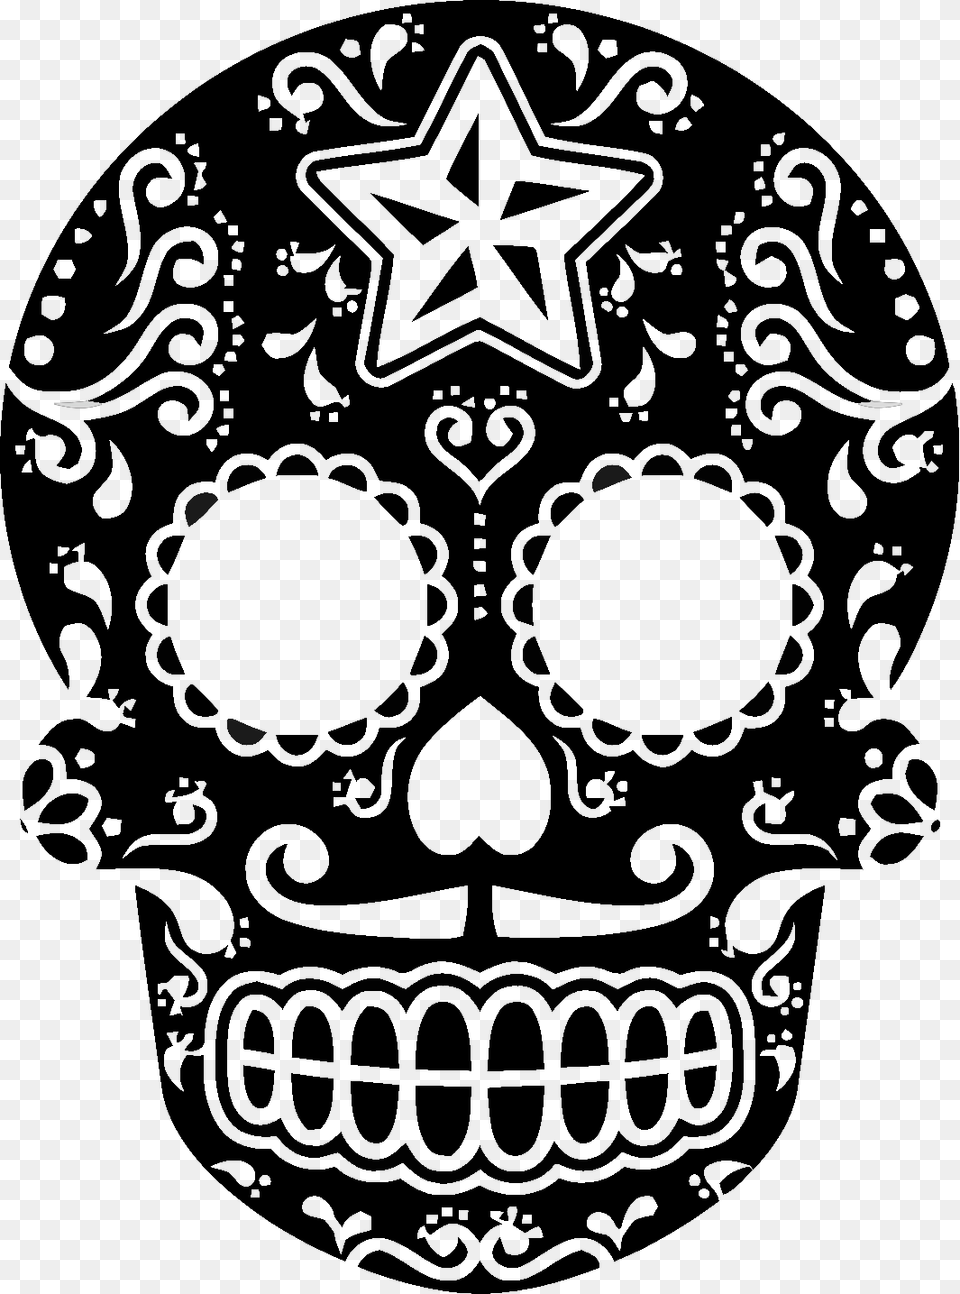 Transparent Dia De Los Muertos Skull Houston Astros Skull Svg, Blackboard, Symbol, Emblem, Logo Png